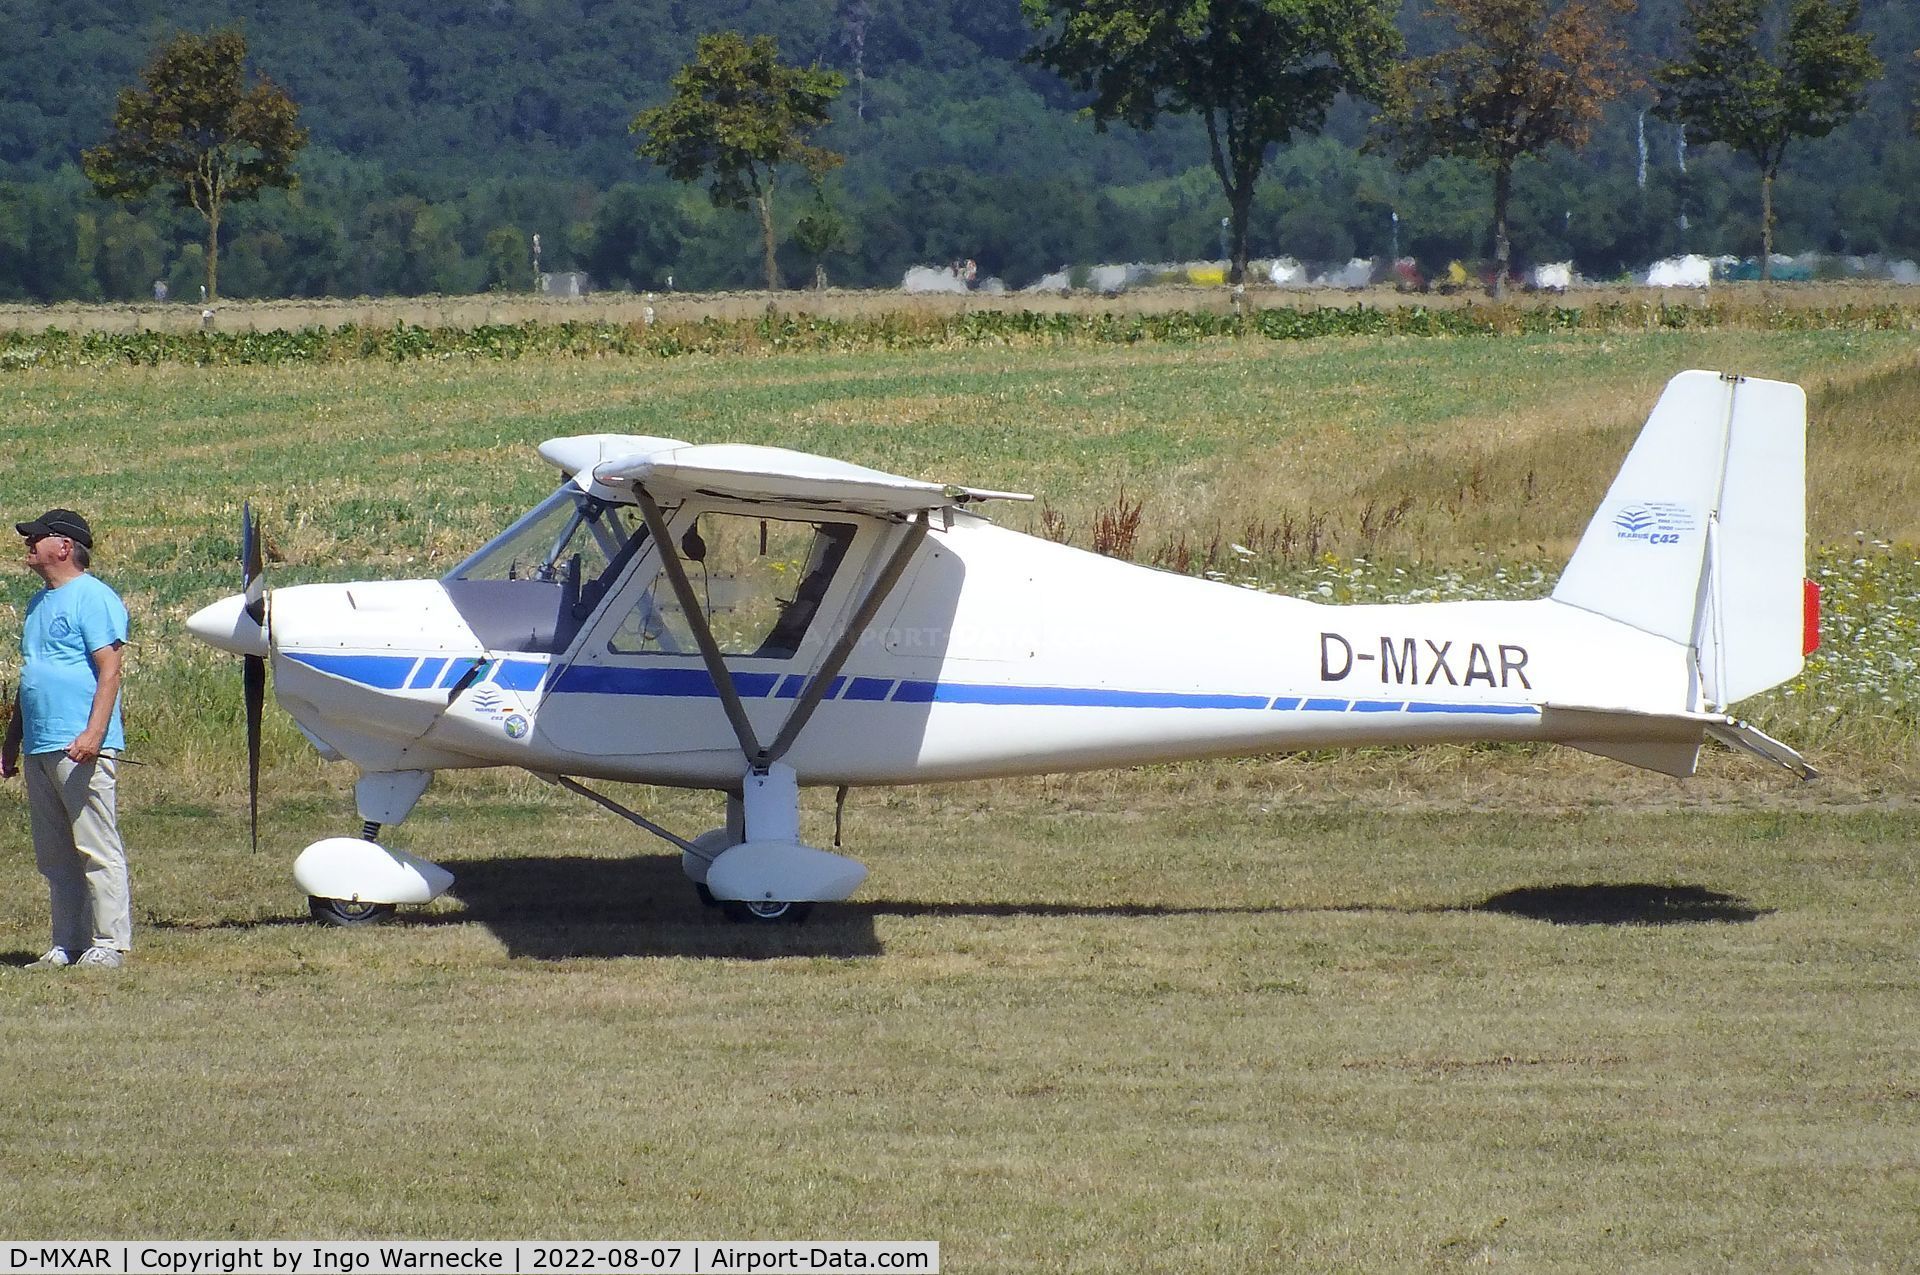 D-MXAR, Comco  Ikarus C42 C/N 0103-6308, Comco Ikarus C42 at the 2022 Flugplatz-Wiesenfest airfield display at Weilerswist-Müggenhausen ultralight airfield